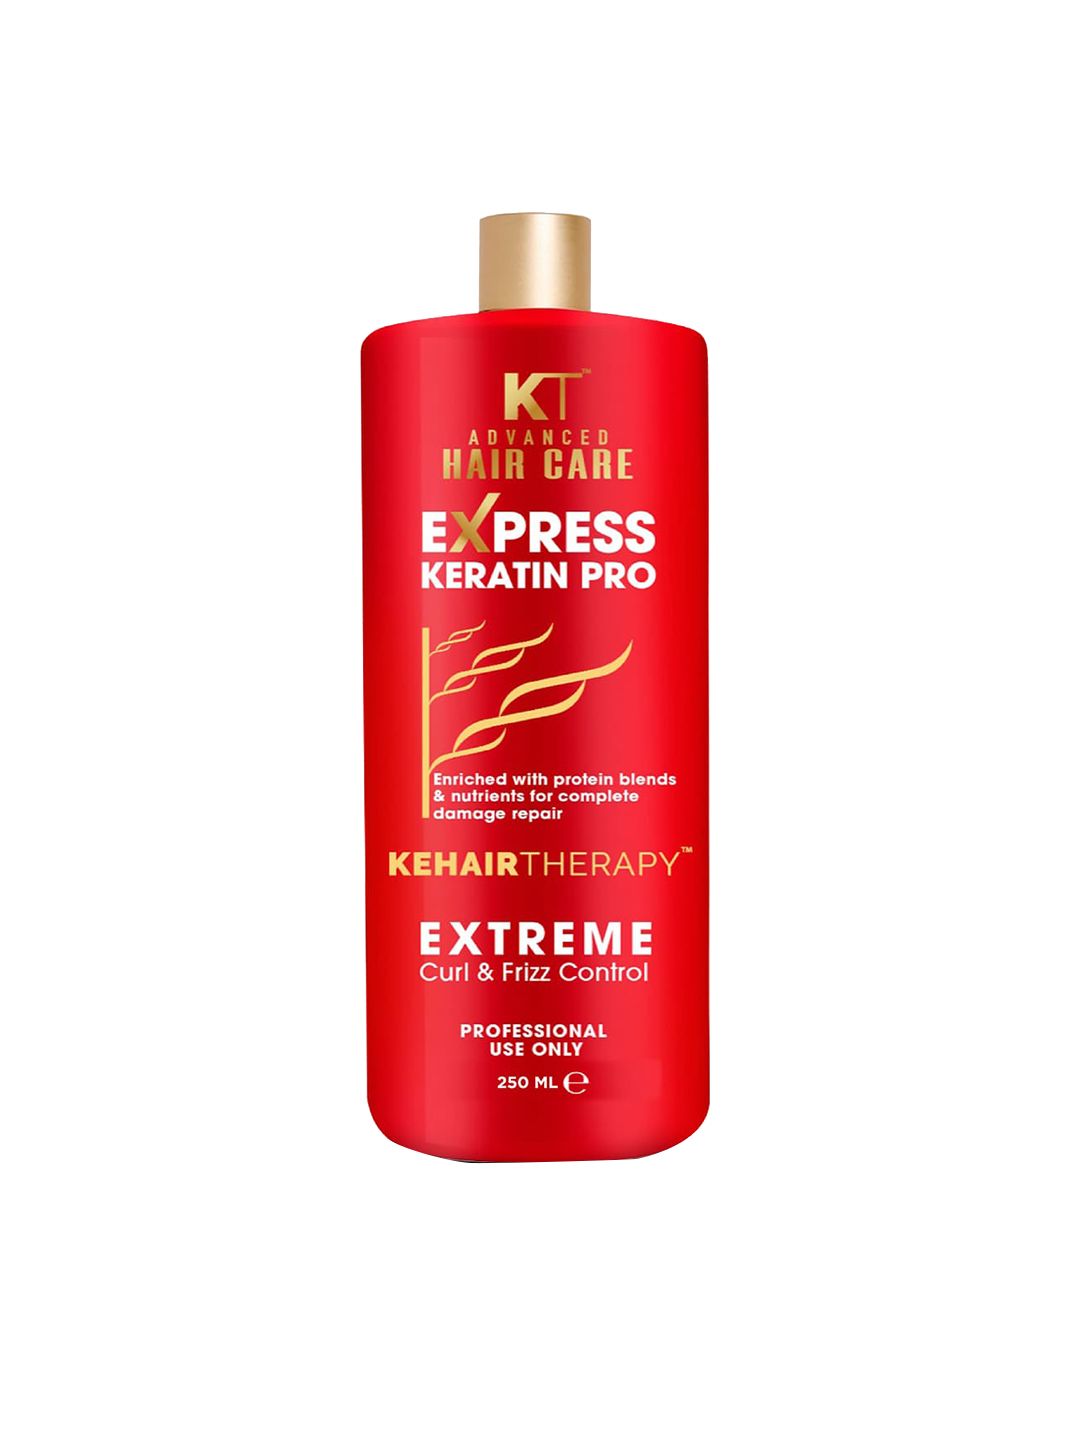 KEHAIRTHERAPY Advanced Haircare Express Keratin Pro Hair Treatment - 250 ml Price in India